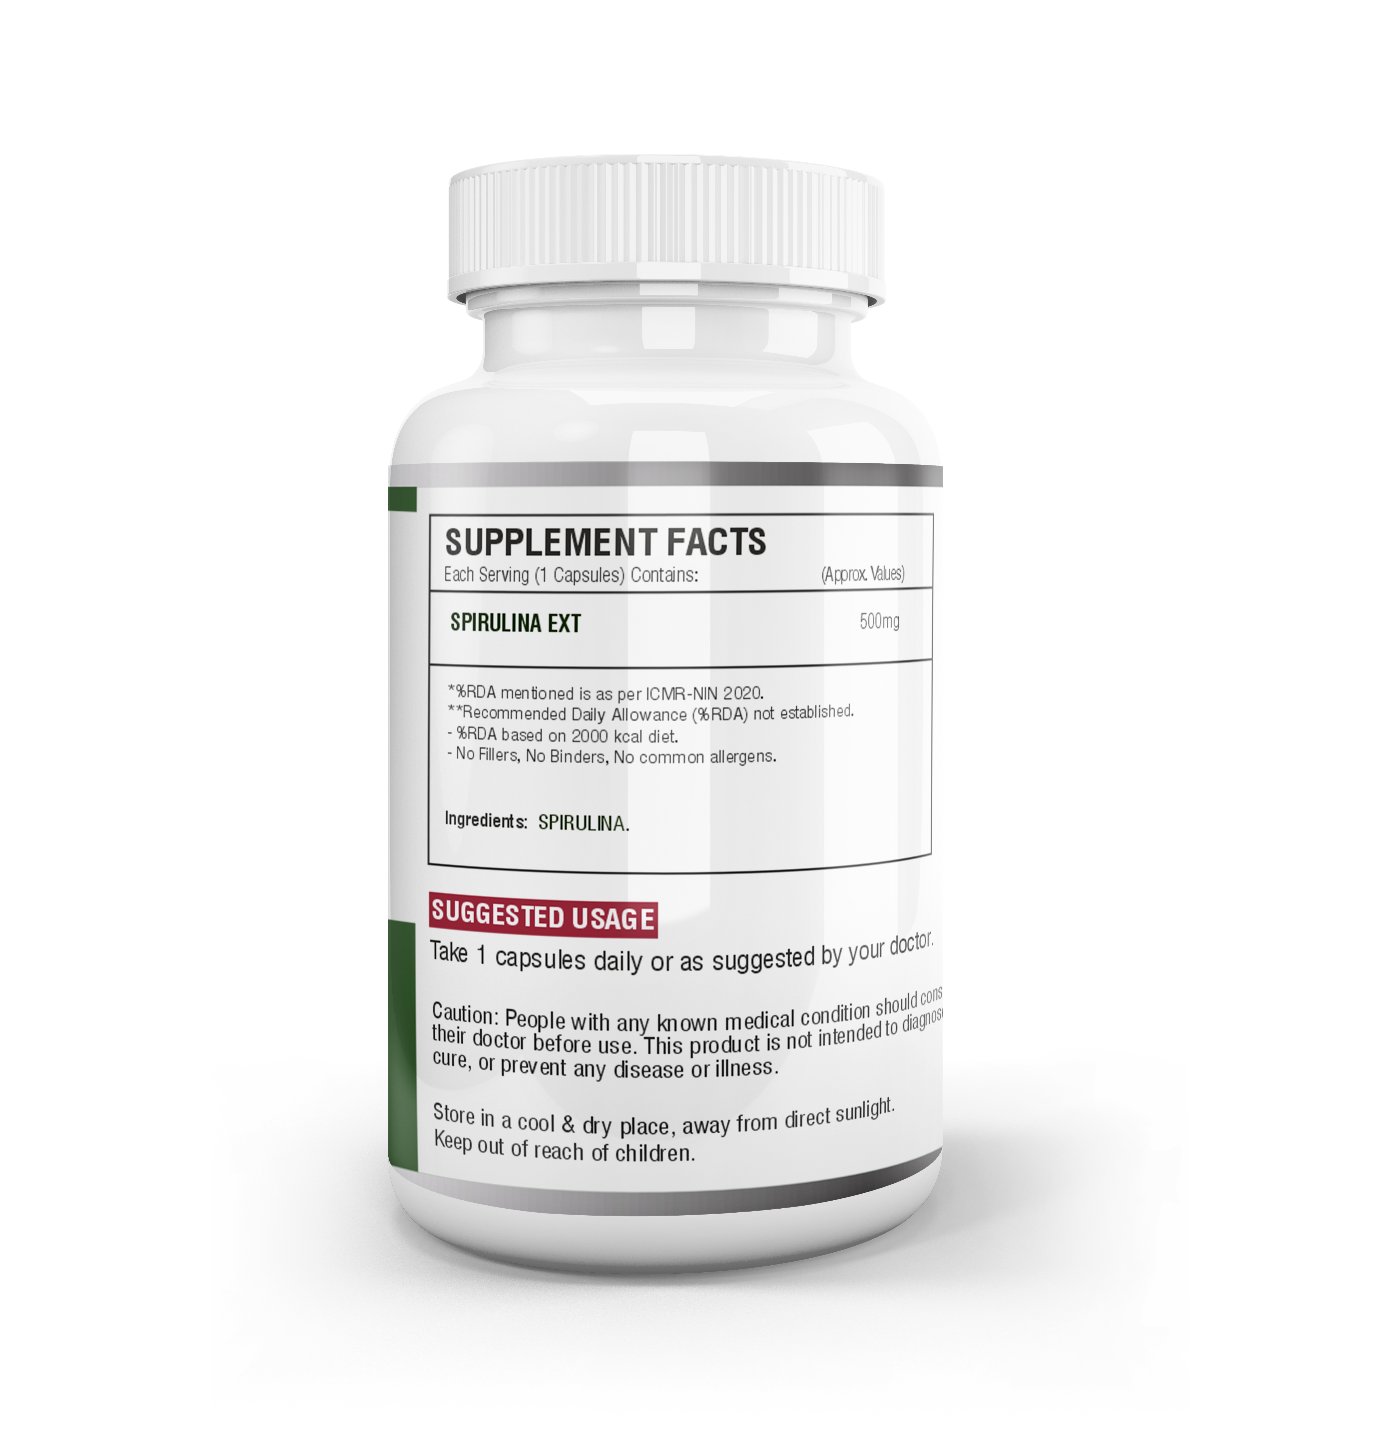 Care Of Zindagi Spirulina Capsules 500mg | Immunity Booster, Liver & Blood Purifier - 60 capsules  - 60 Capsules, April, 24 Months